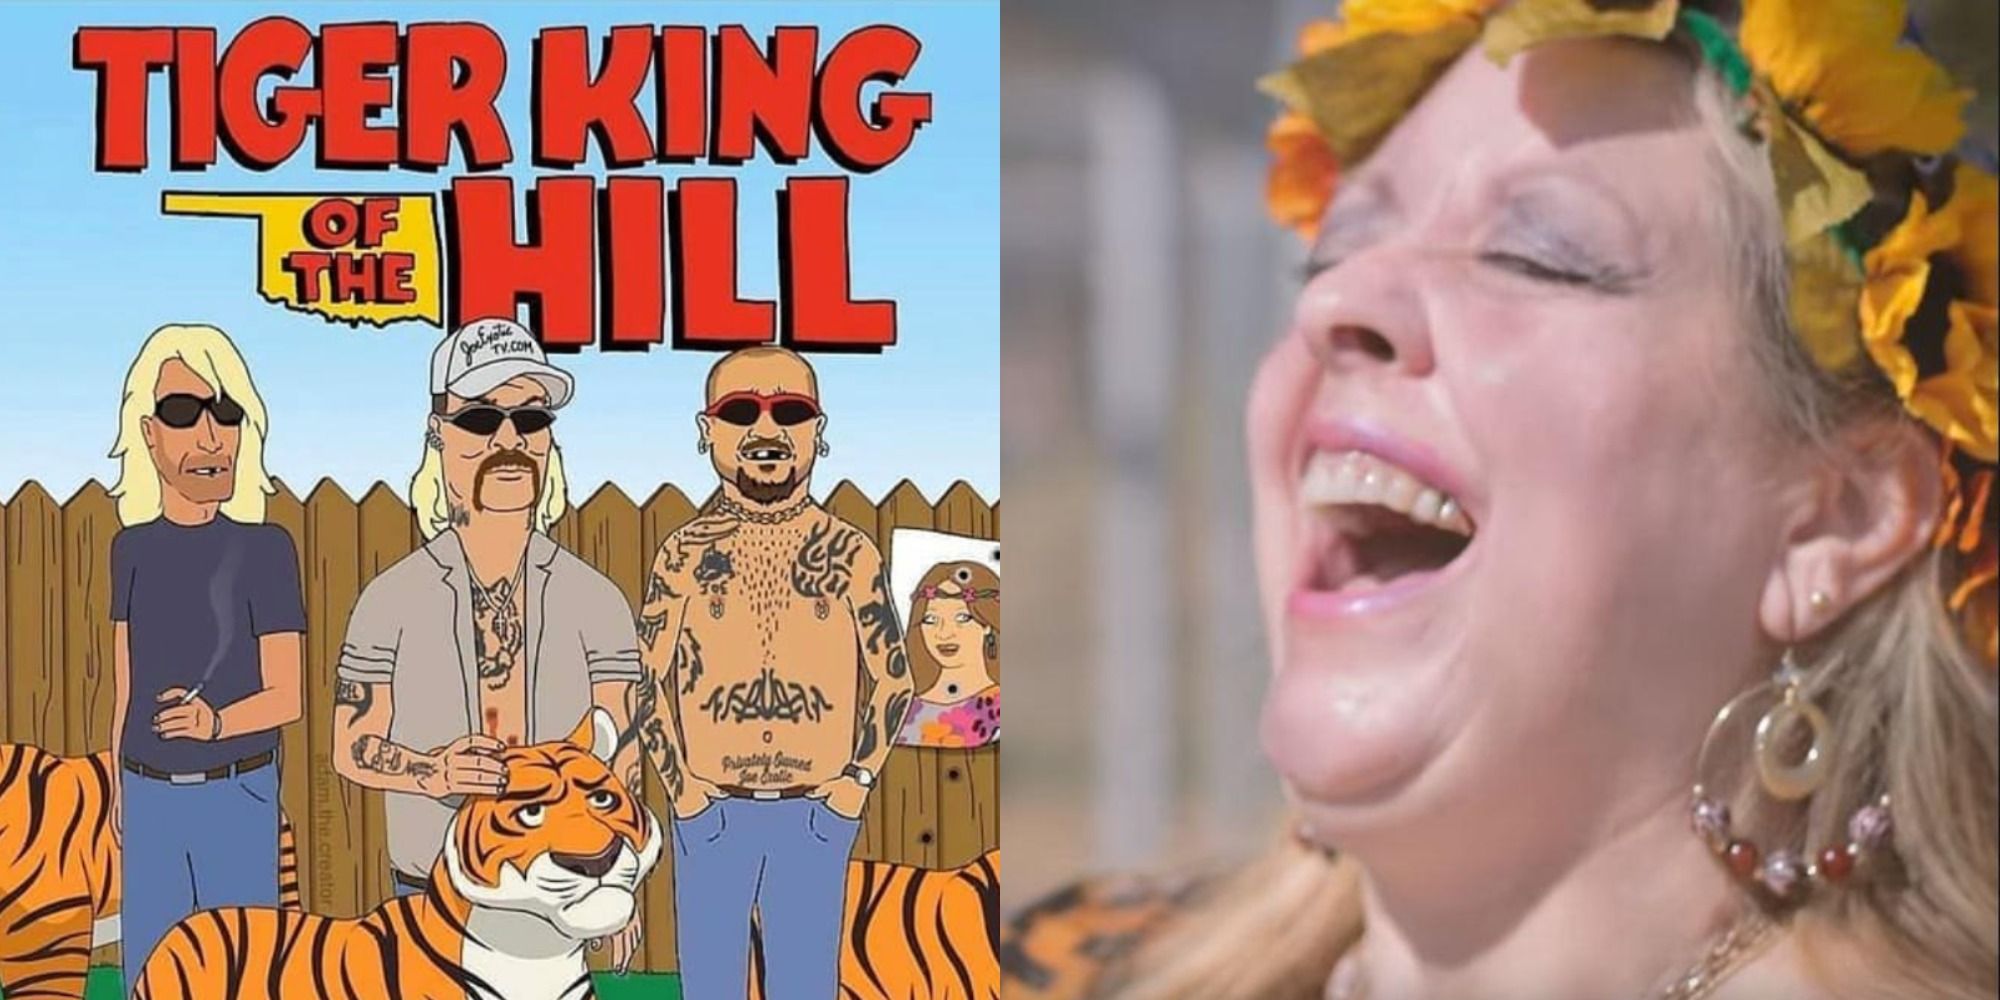 Split image of a Tiger King meme and Carole Baskin laughing